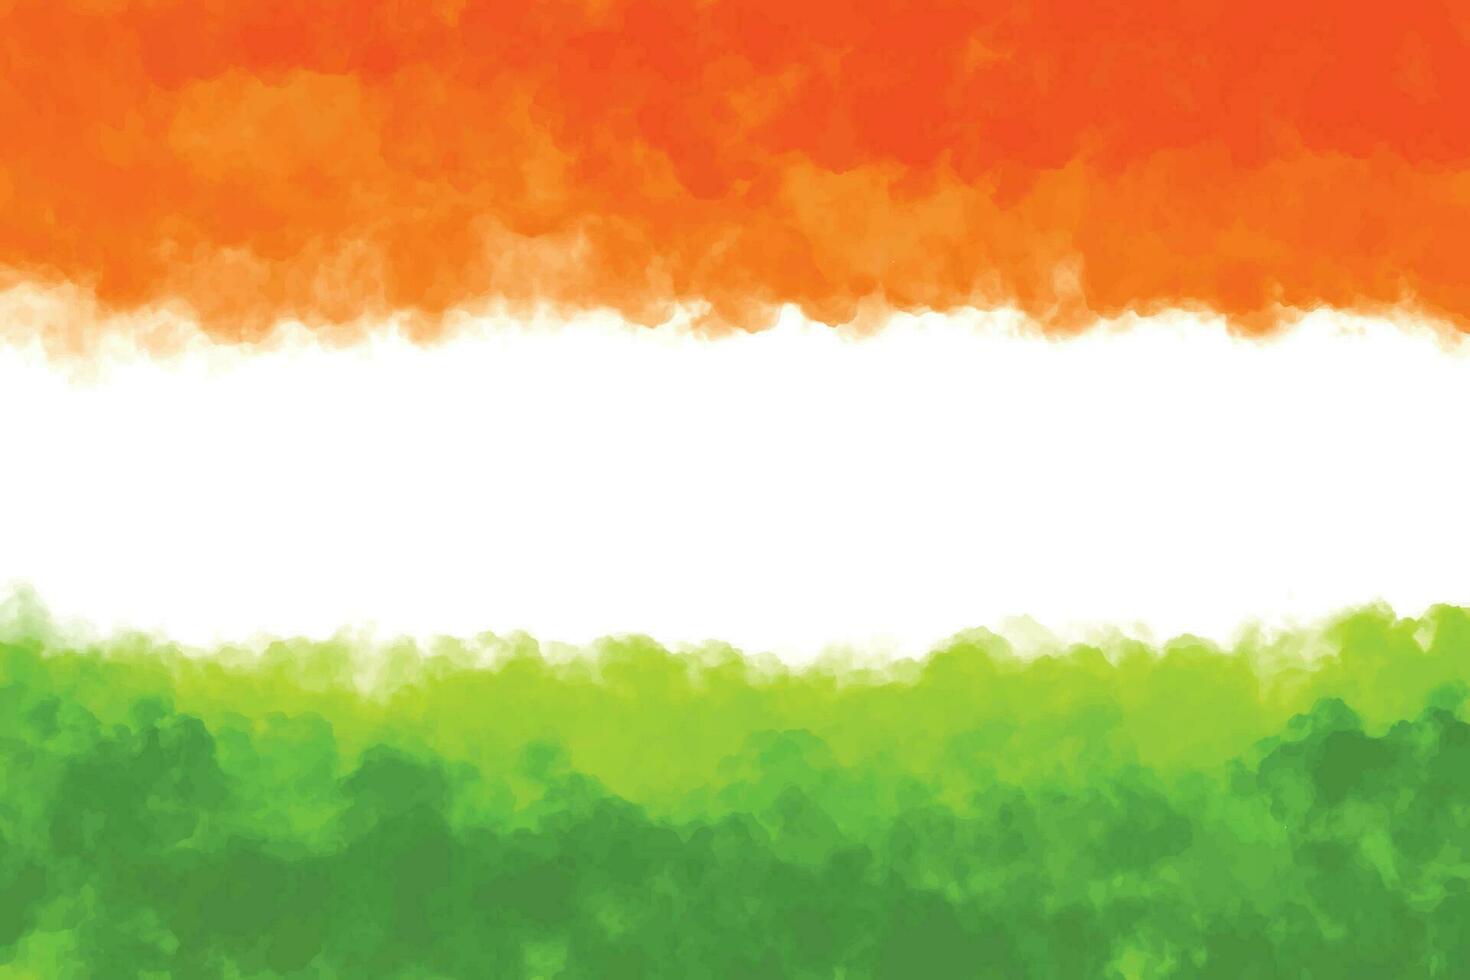 oberoende dag firande indisk flagga tema textur bakgrund vektor